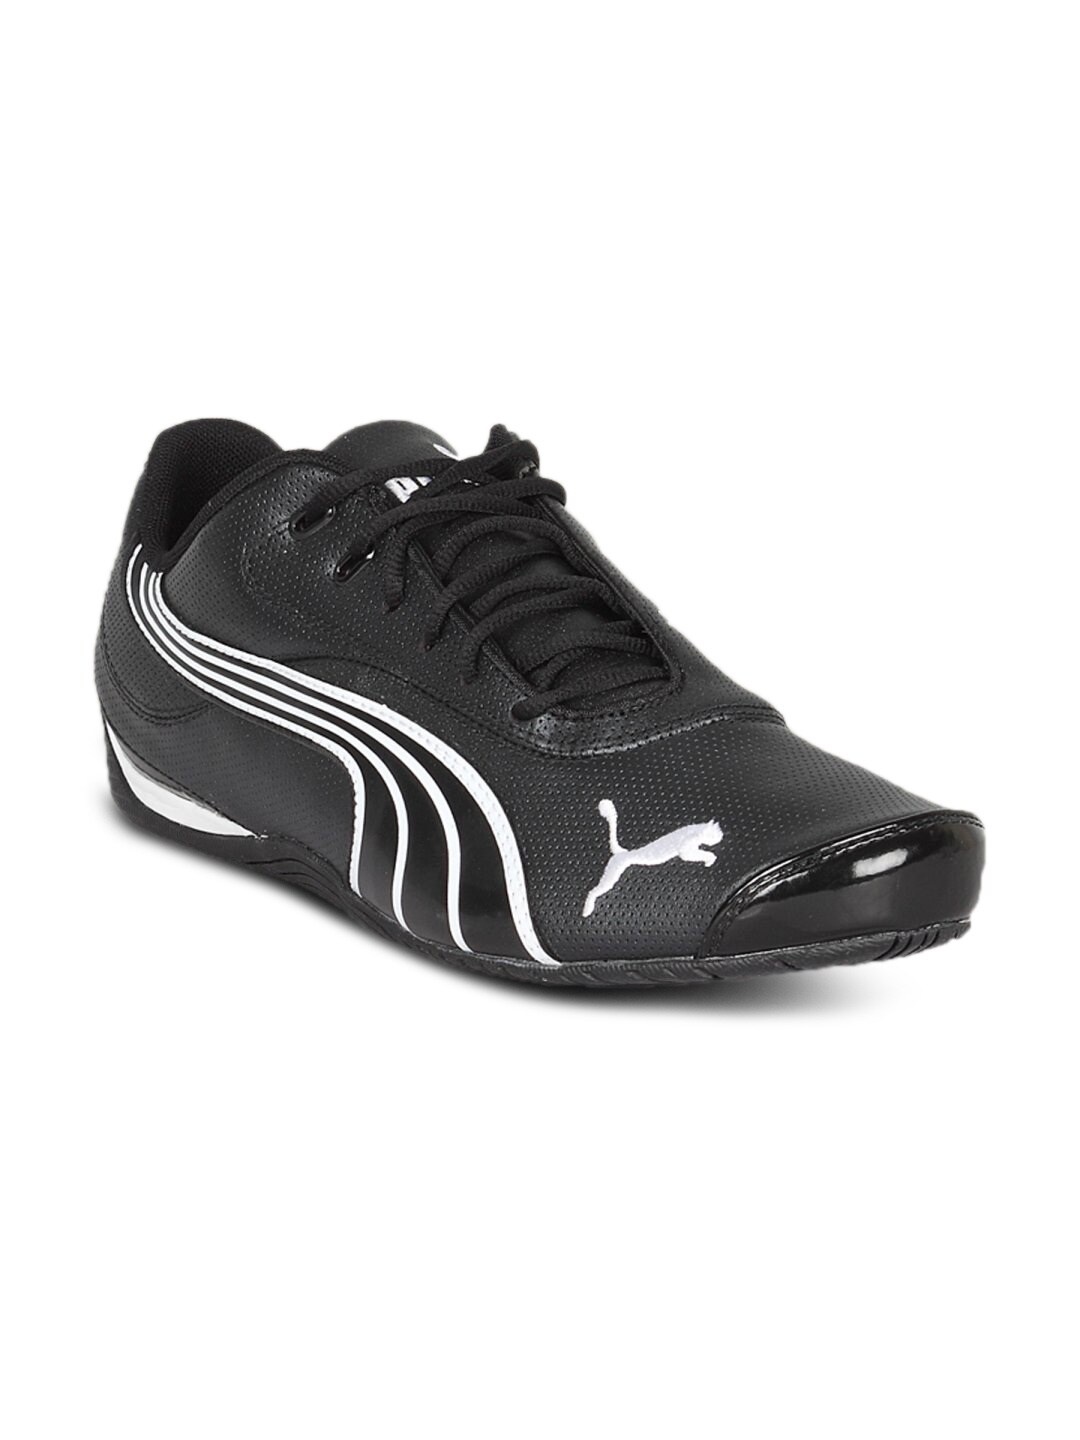 Puma Men's Drift Cat Black Shoe